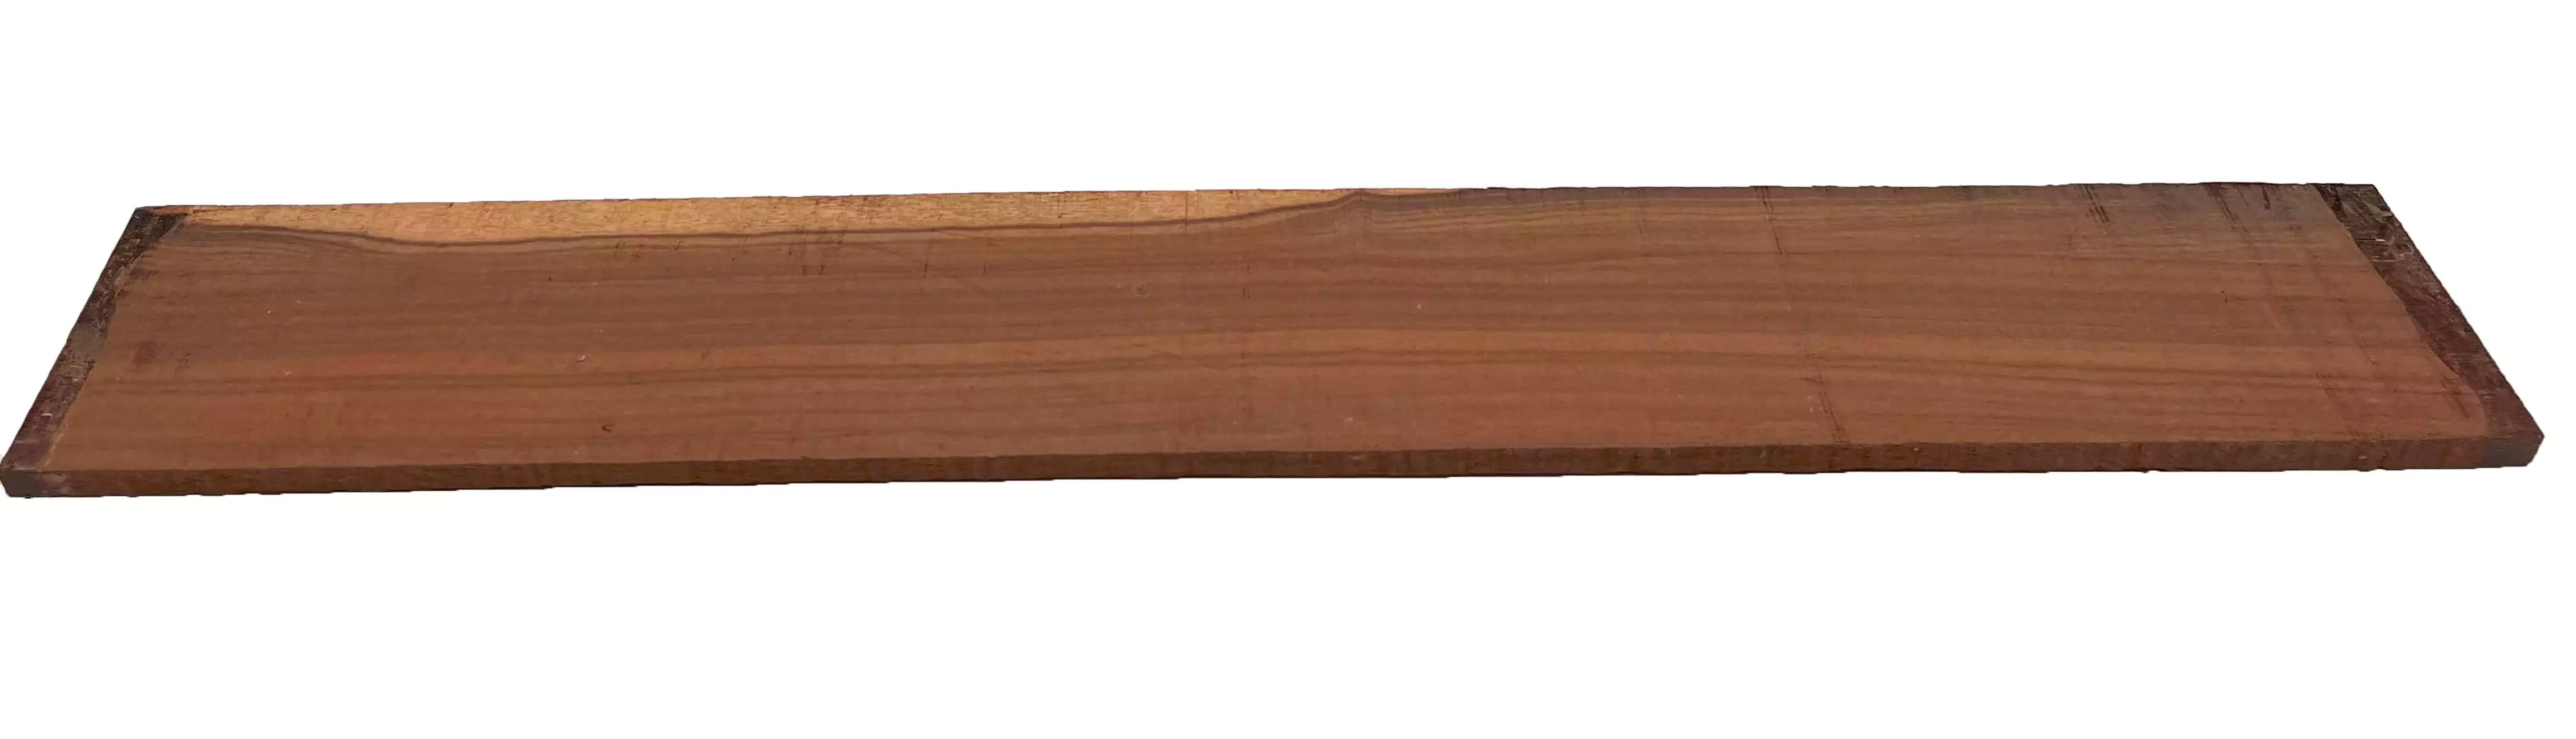 Granadillo Guitar Fingerboard Blank - Exotic Wood Zone - Buy online Across USA 